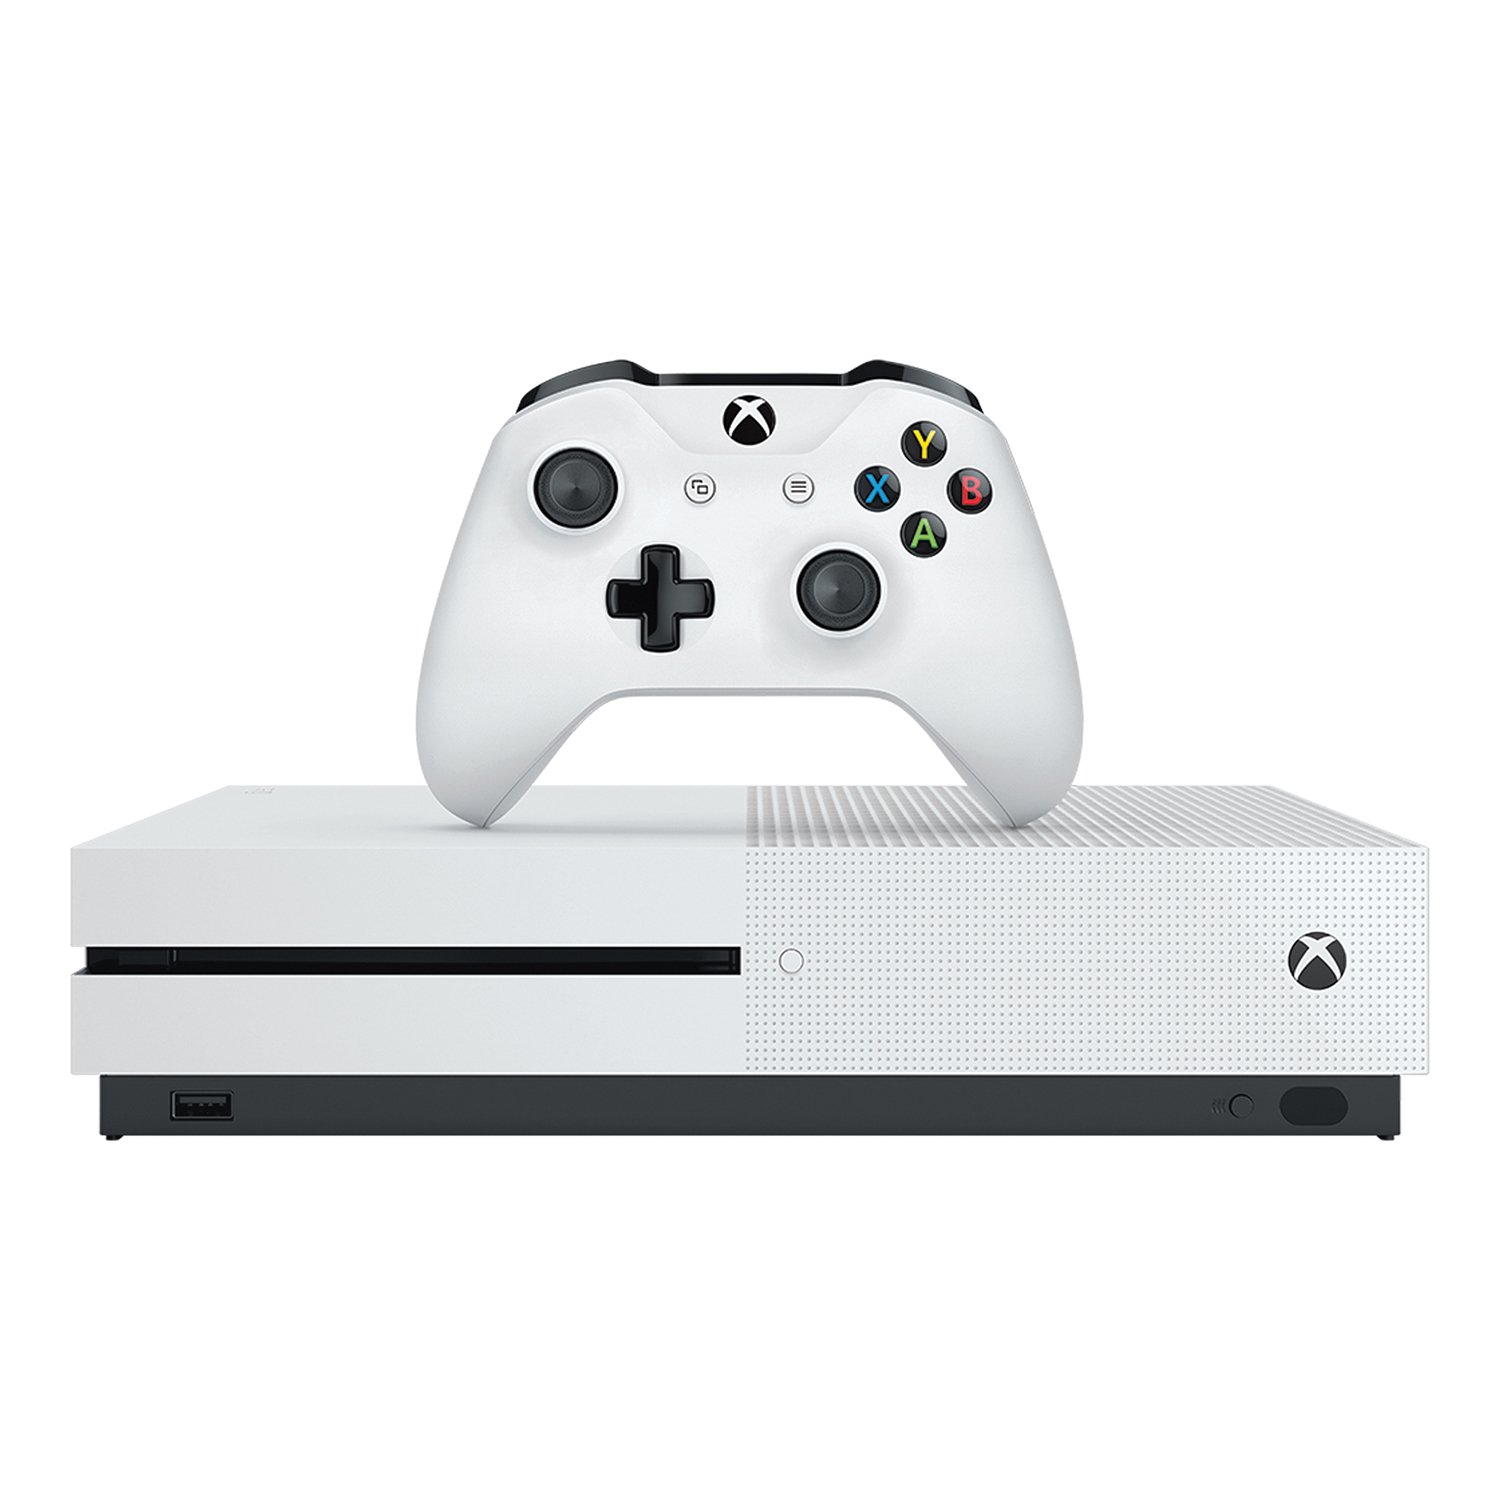 Microsoft Xbox One X: Should you upgrade?